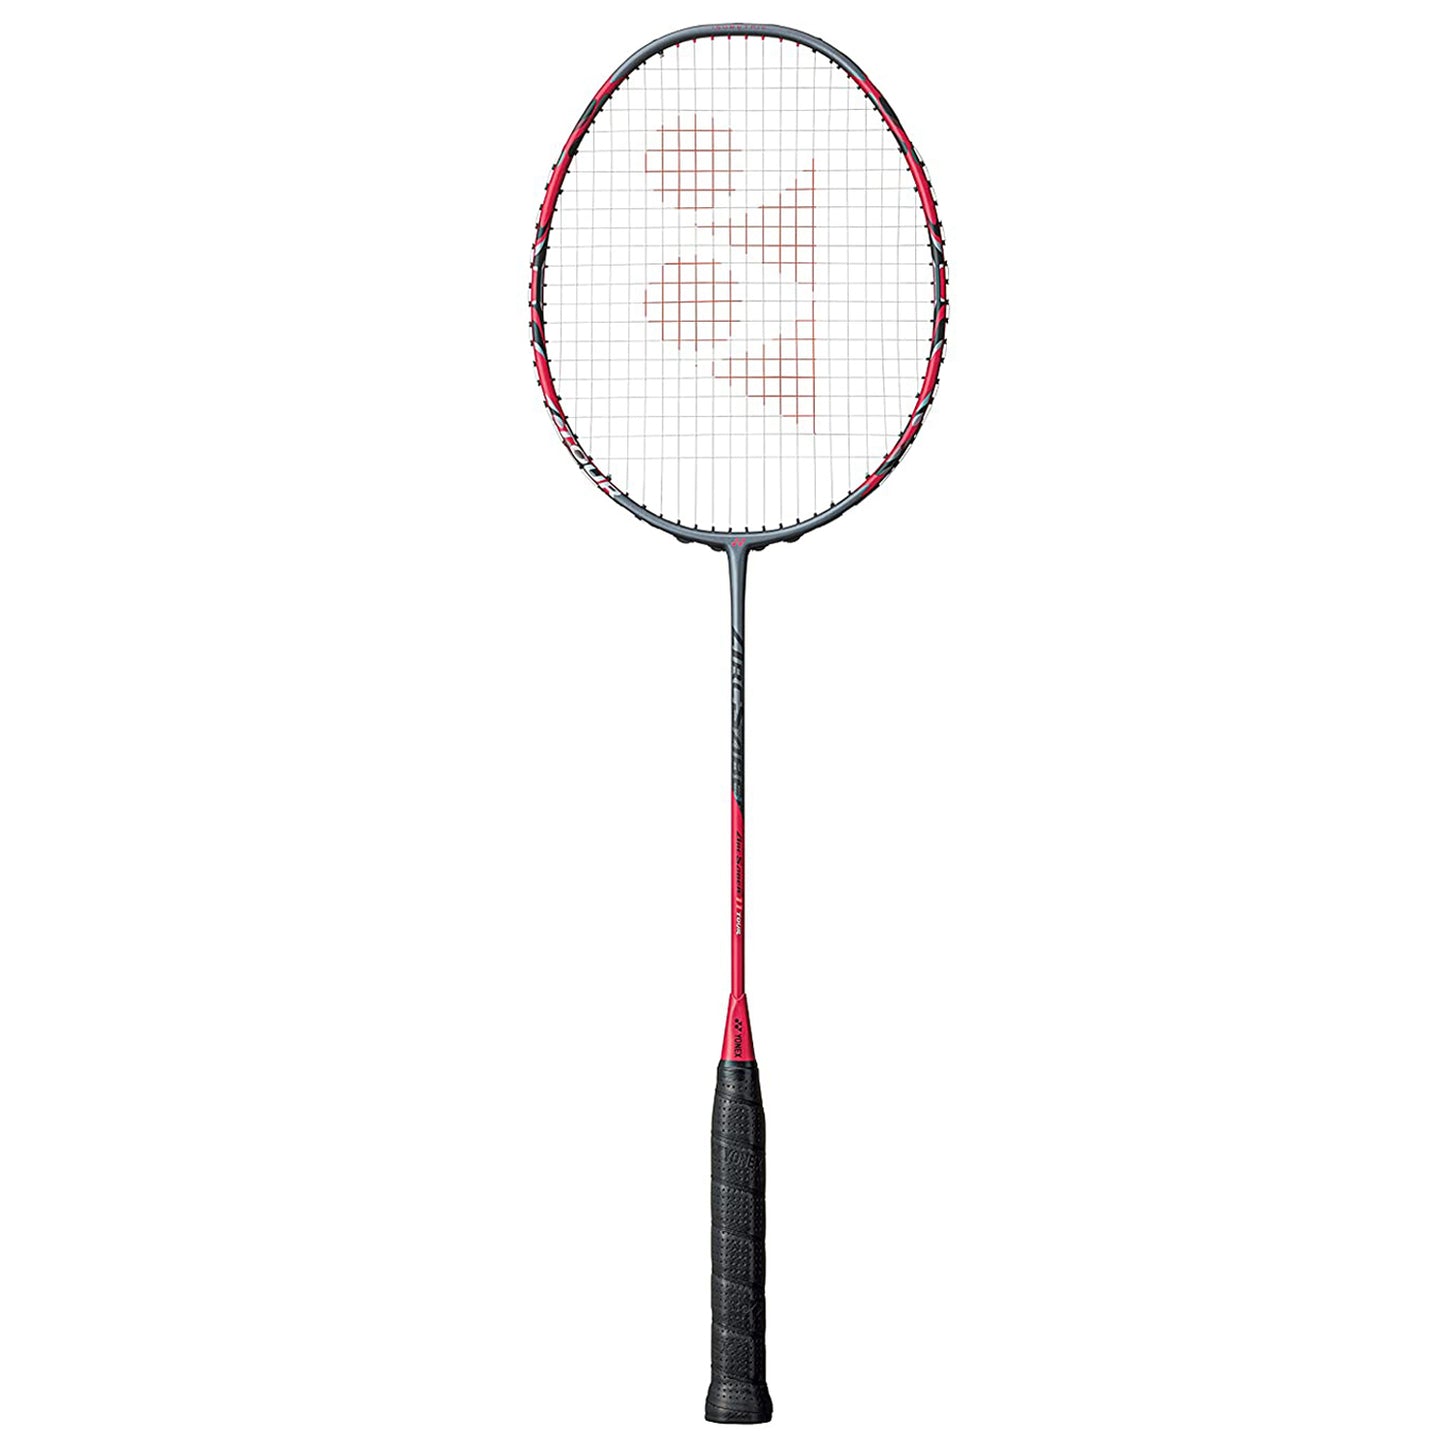 Yonex Arcsaber 11 Tour Strung Badminton Racquet, 4U5 - Grayish Pearl - Best Price online Prokicksports.com